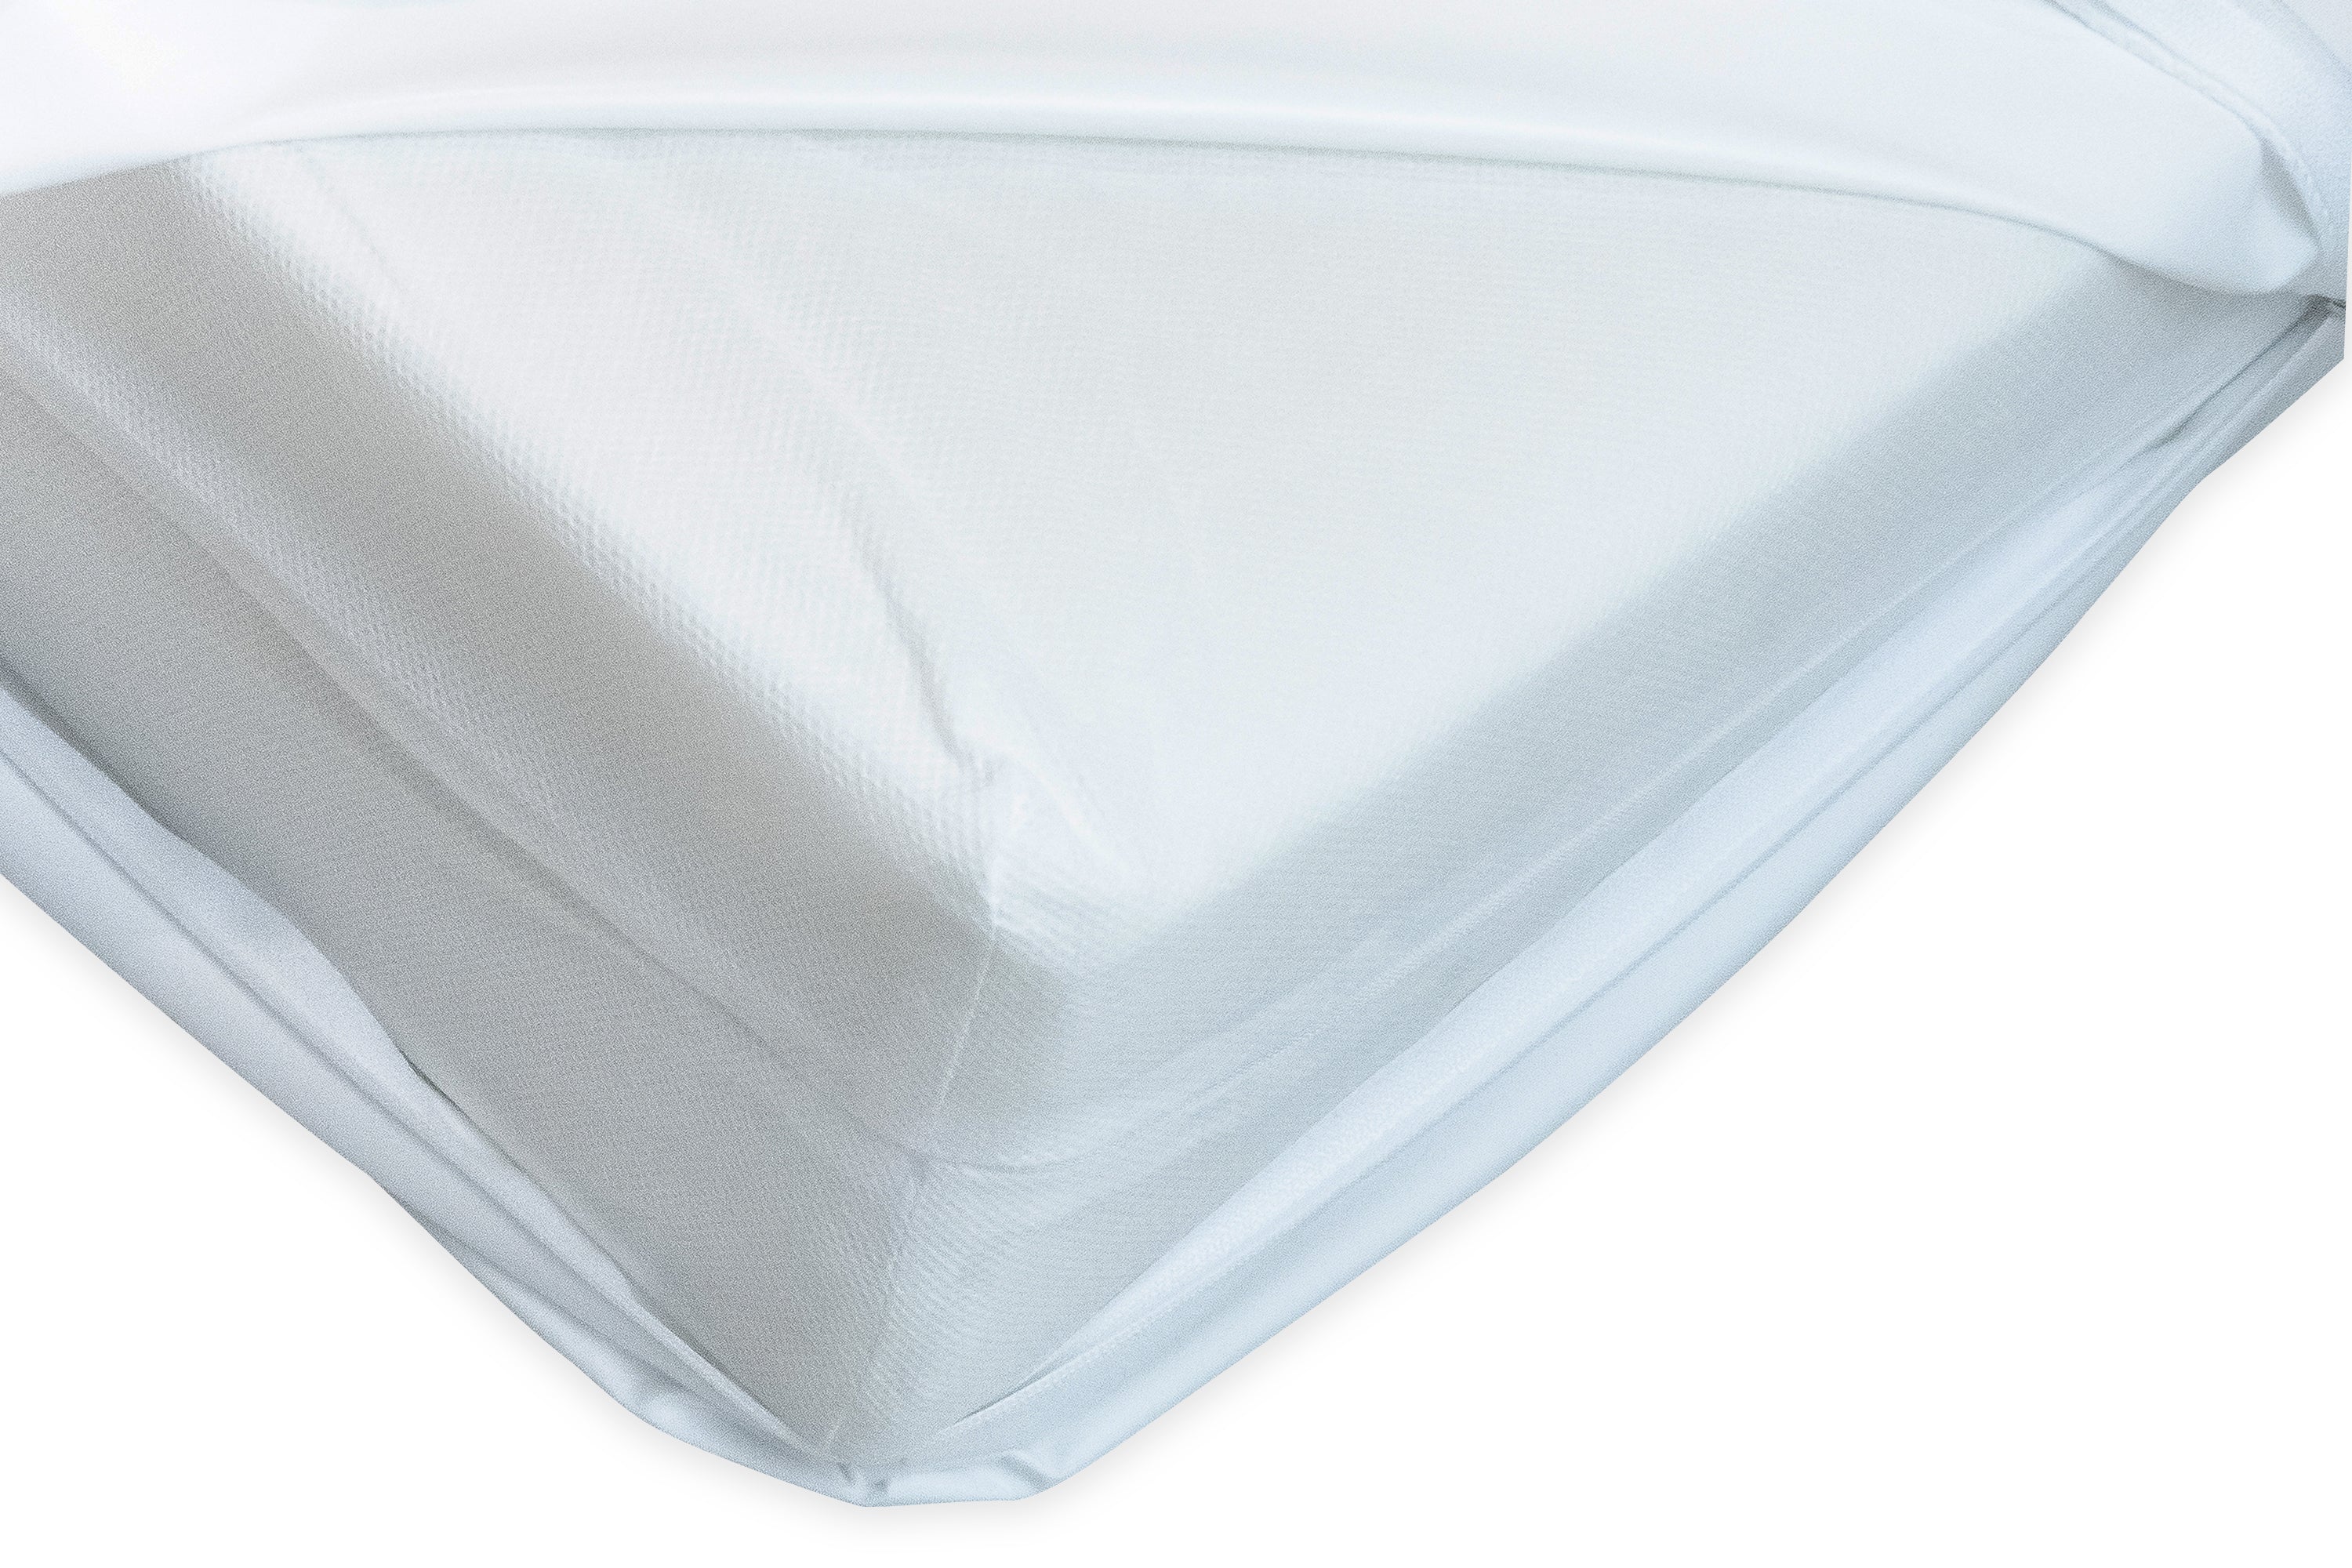 unzipped hatchling tamago mattress protector